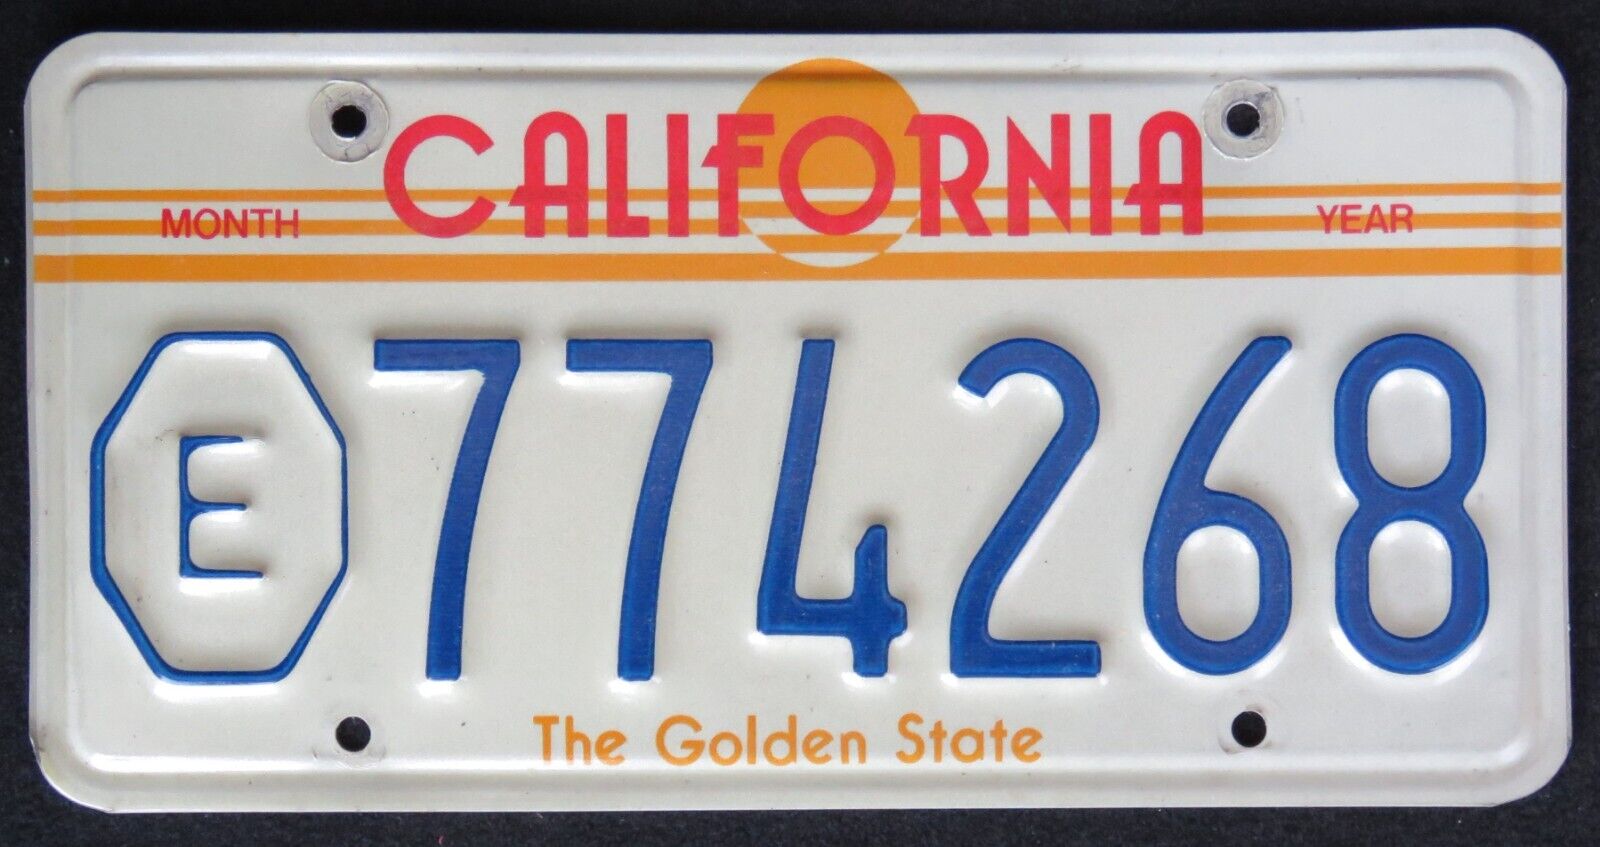 CALIFORNIA EXEMPT  license plate   1984   E 774268